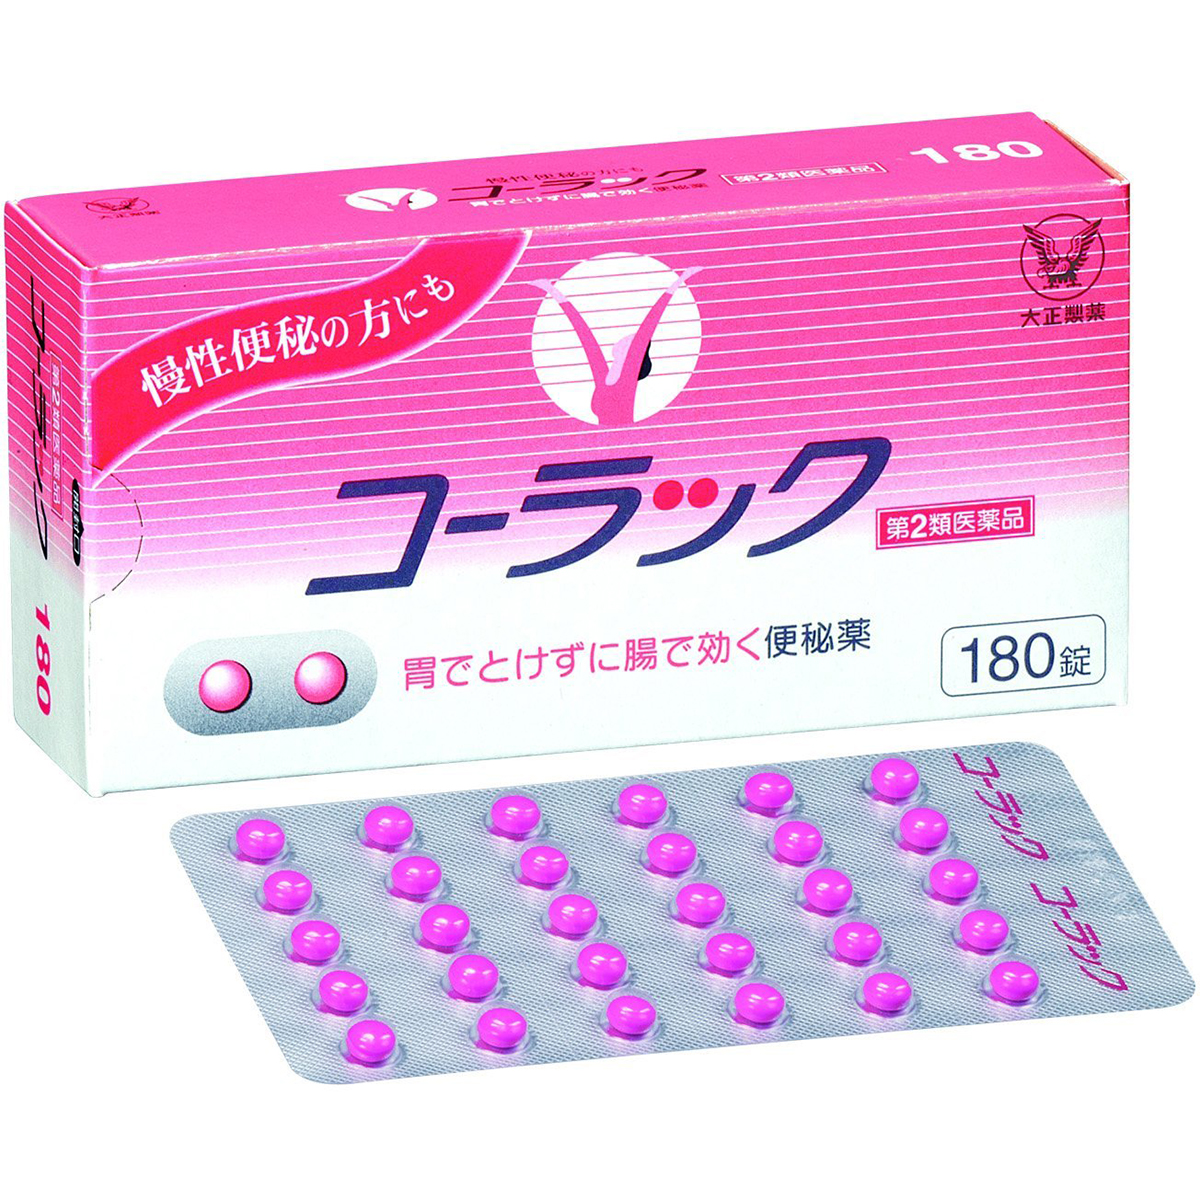 Японские таблетки